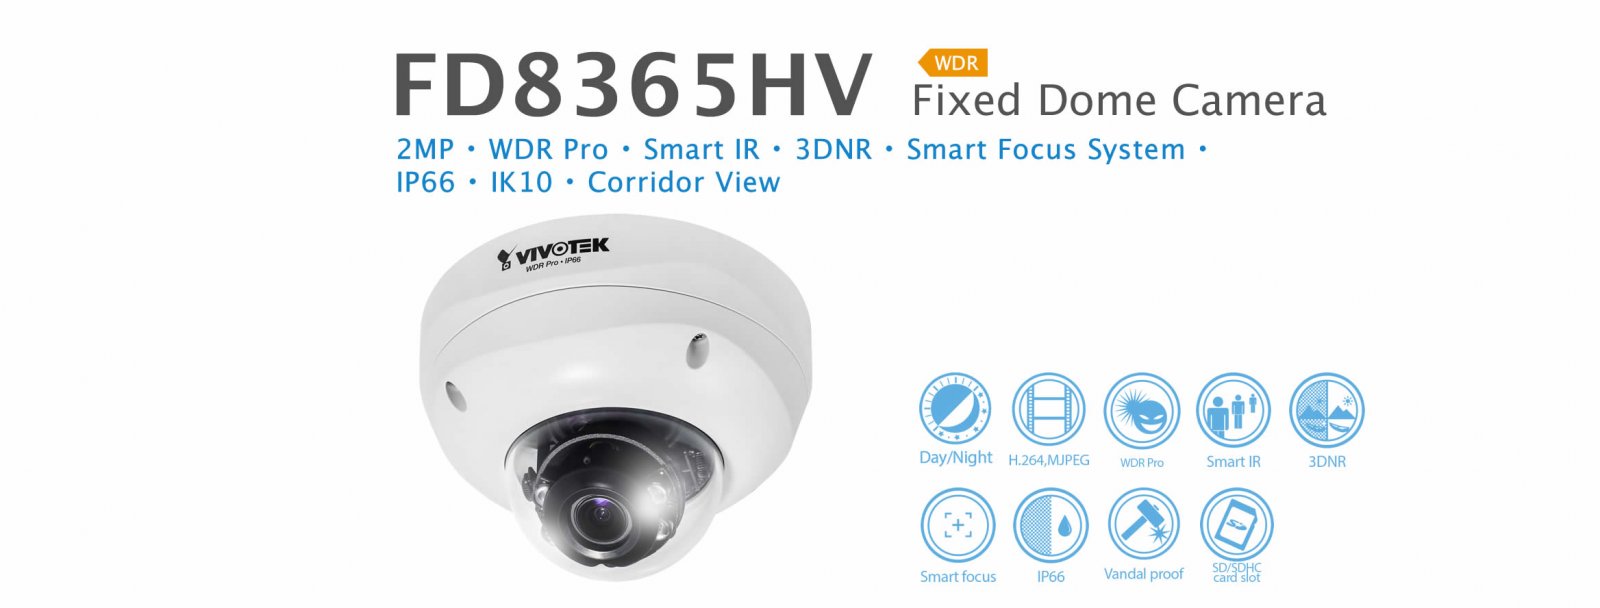 FD8365HV. Vivotek Fixed Dome Camera